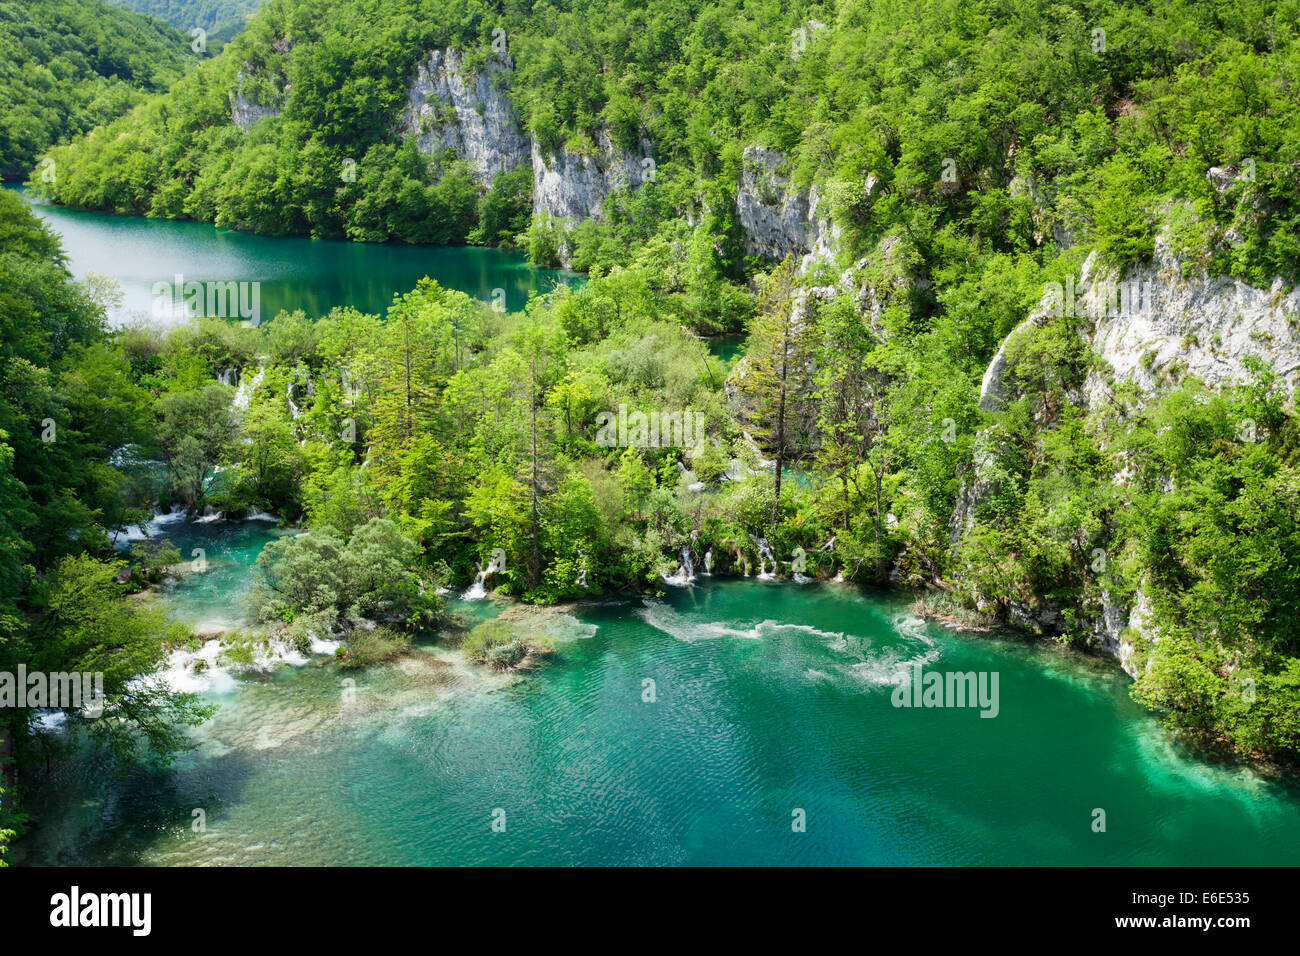 The lower lakes, Gavanovac Lake and Milanovac Lake, Plitvice Lakes National Park, UNESCO World Heritage Site, Croatia Stock Photo